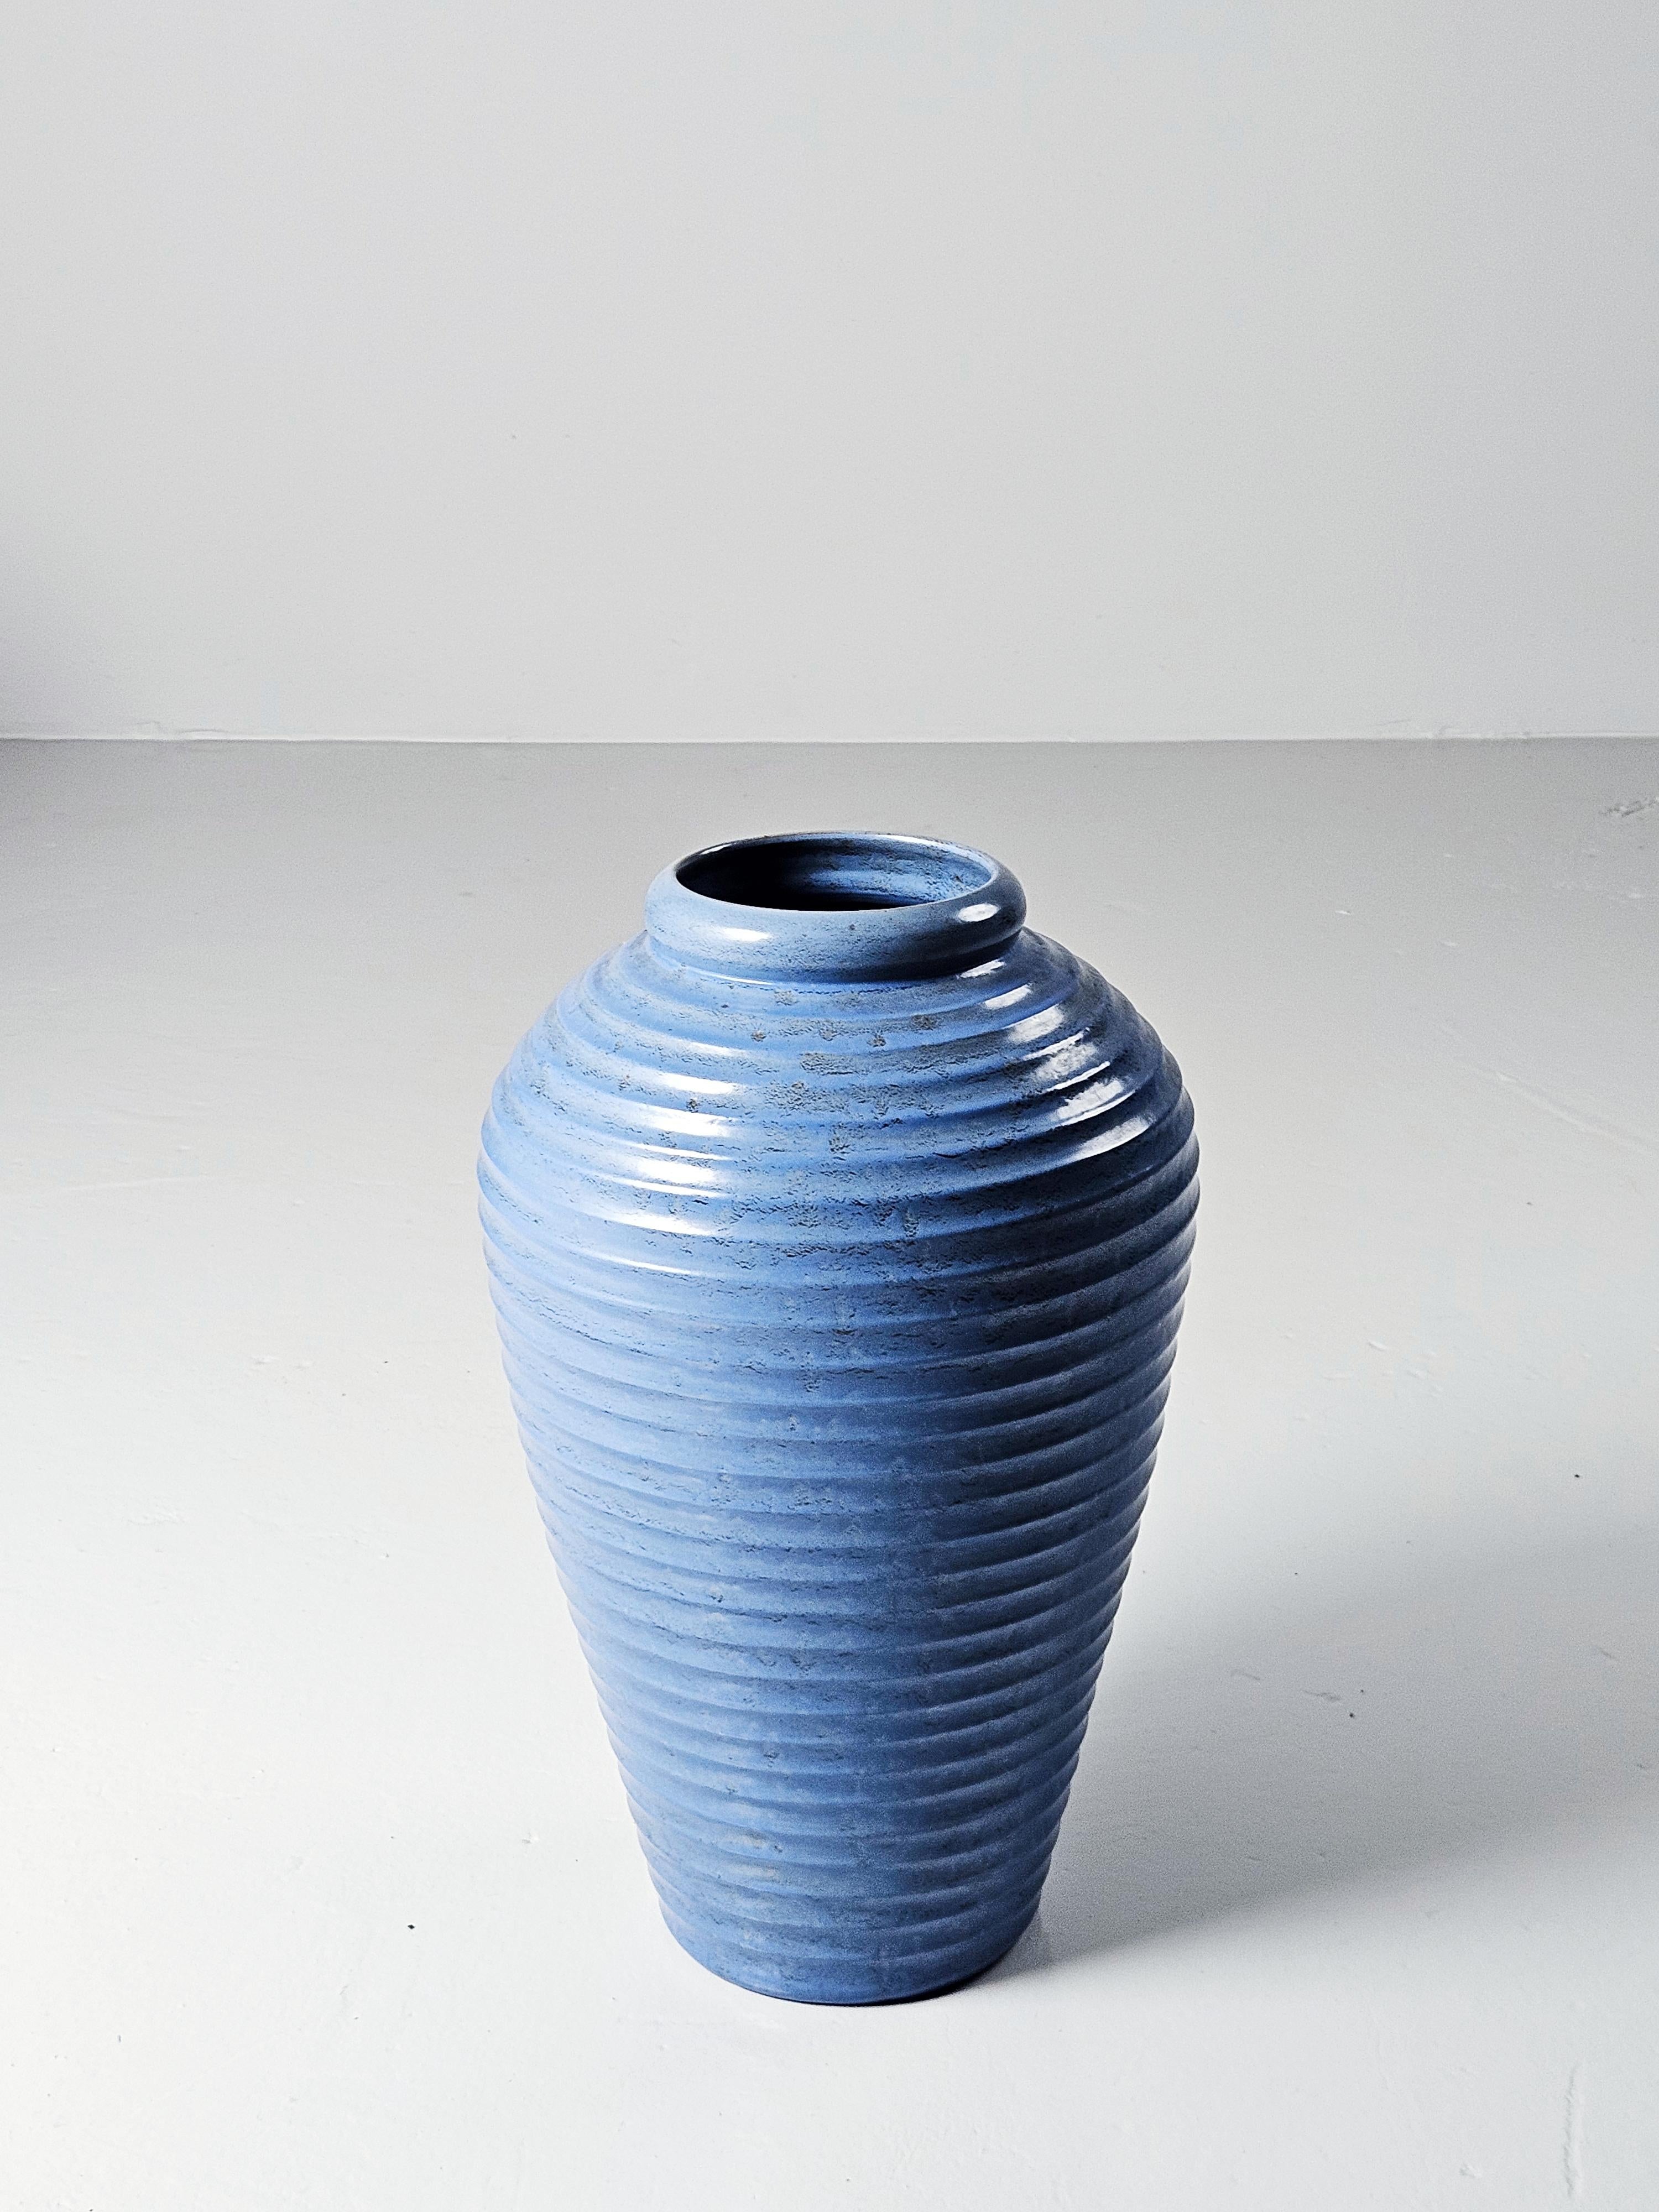 Floor vase designed by Jerk Werkmäster and produced by Nittsjö in the middle of the 20th century. 

Werkmäster was the artistic director at Nittsjö Ceramics between 1933-1967.